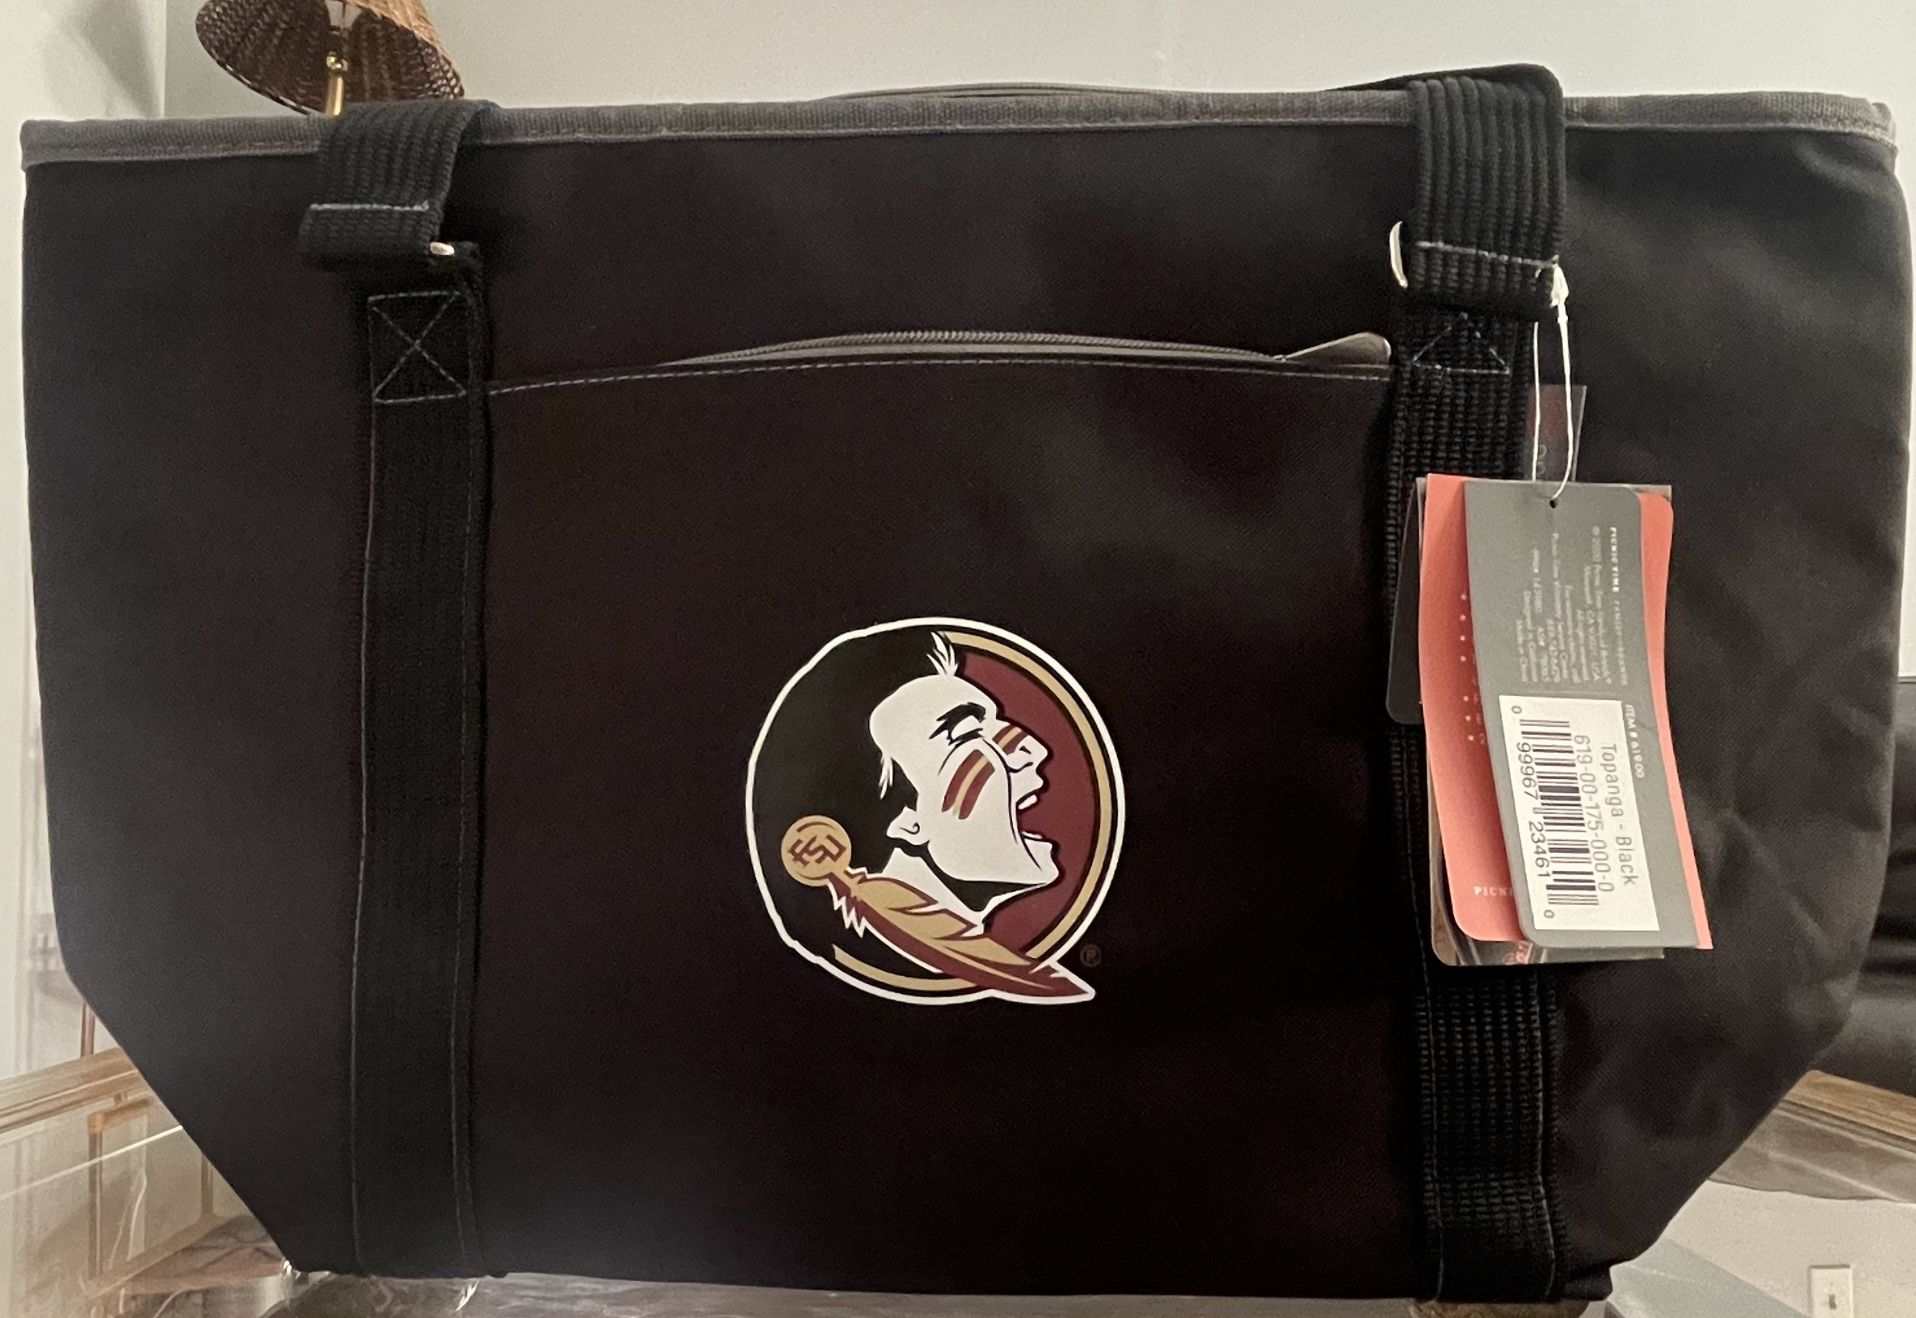 FSU Cooler Tote Bag